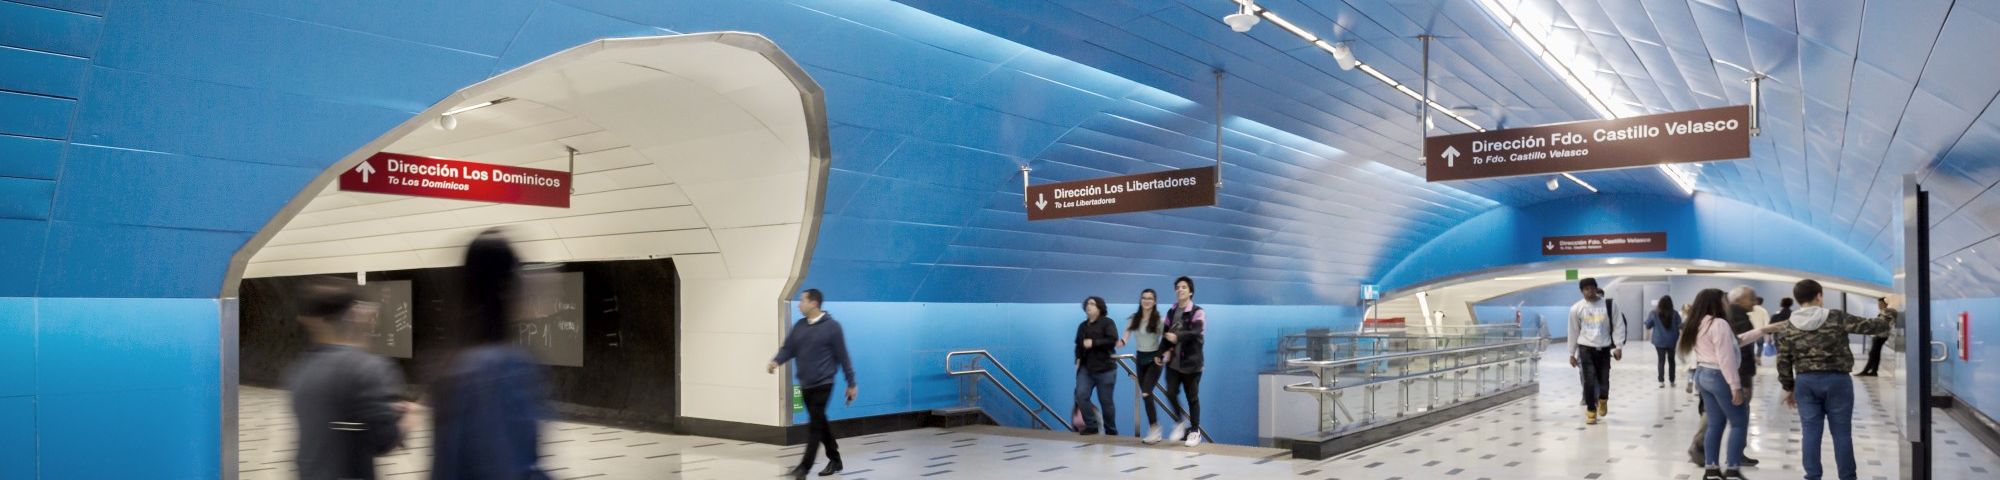 people walking within blue walkway tunnel